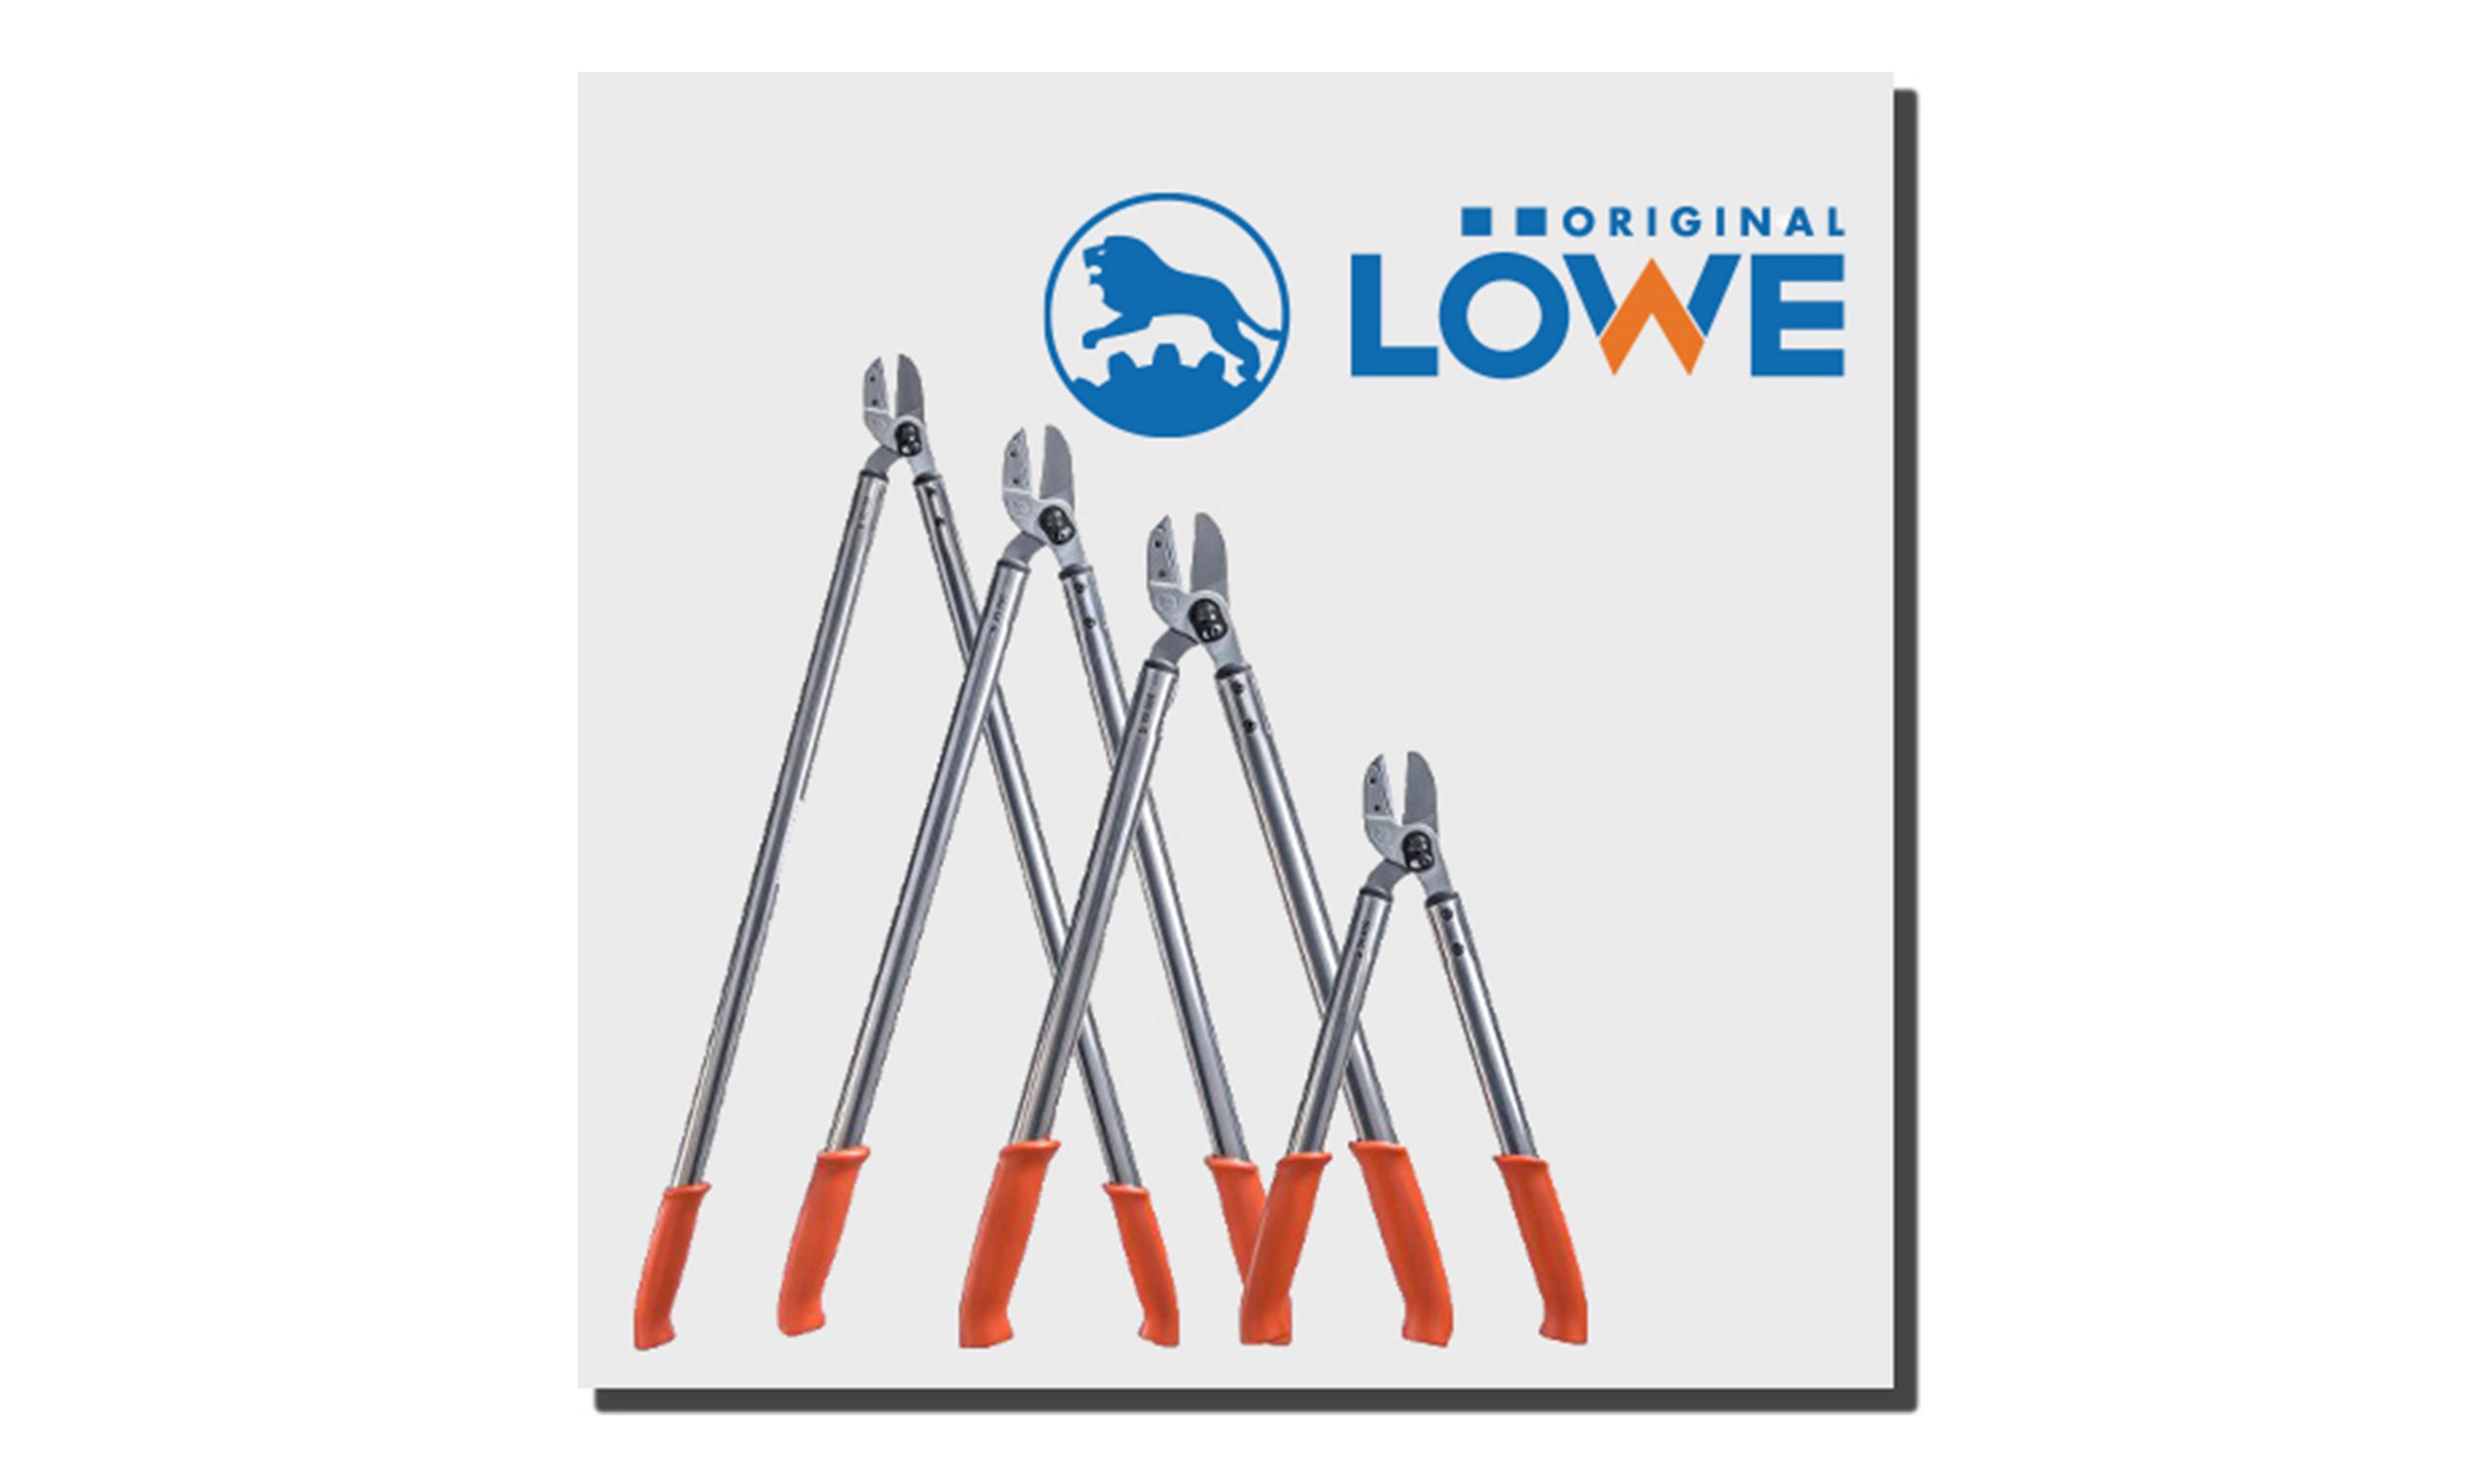 LOWE 20 シリーズ 太枝切りバサミ – 和光商事株式会社